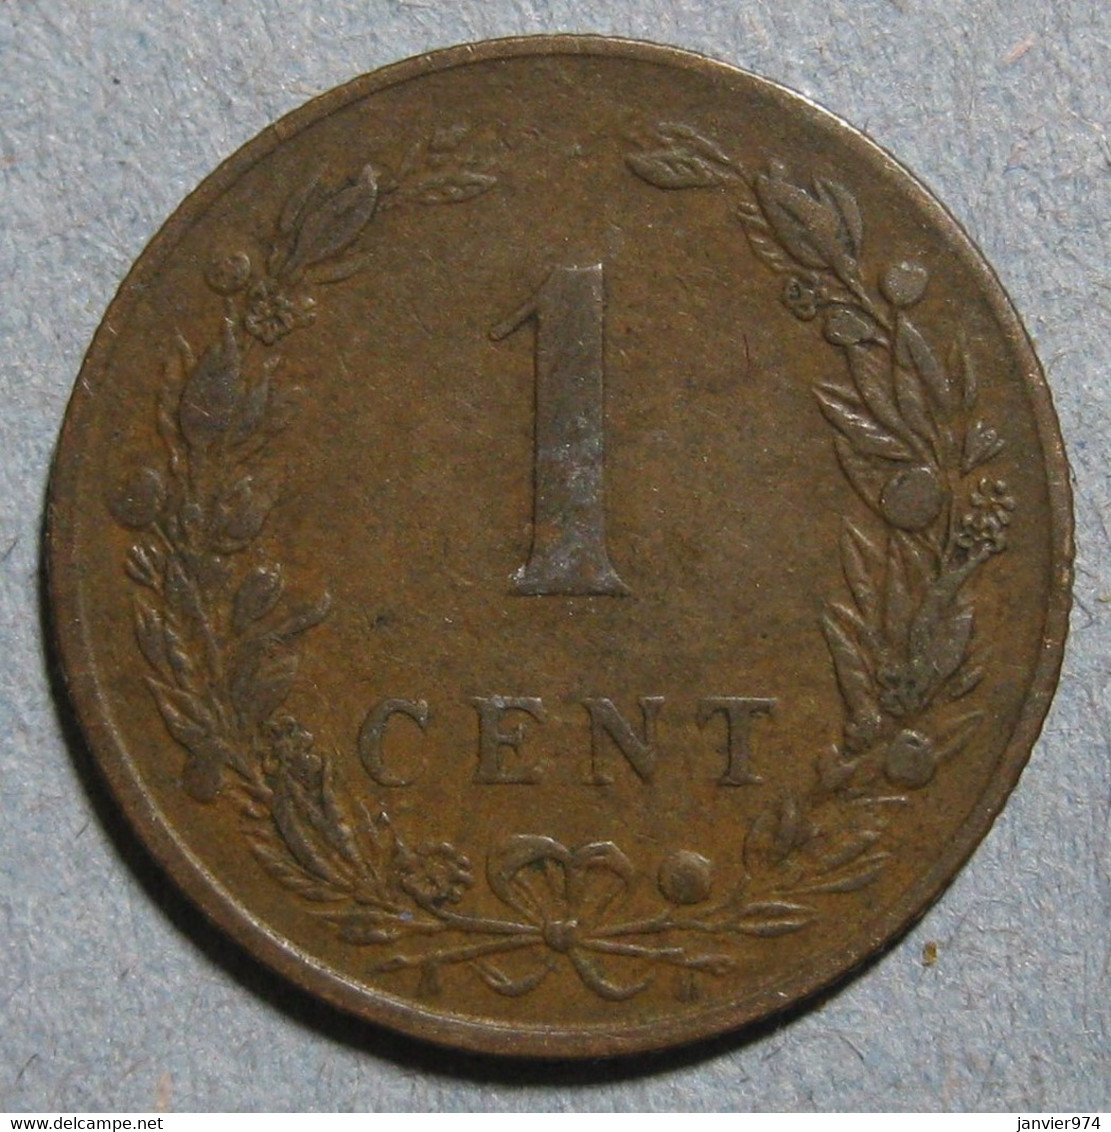 Pays-Bas, 1 Cent 1916, WILHELMINA I. Bronze. KM# 152 - 1 Centavos